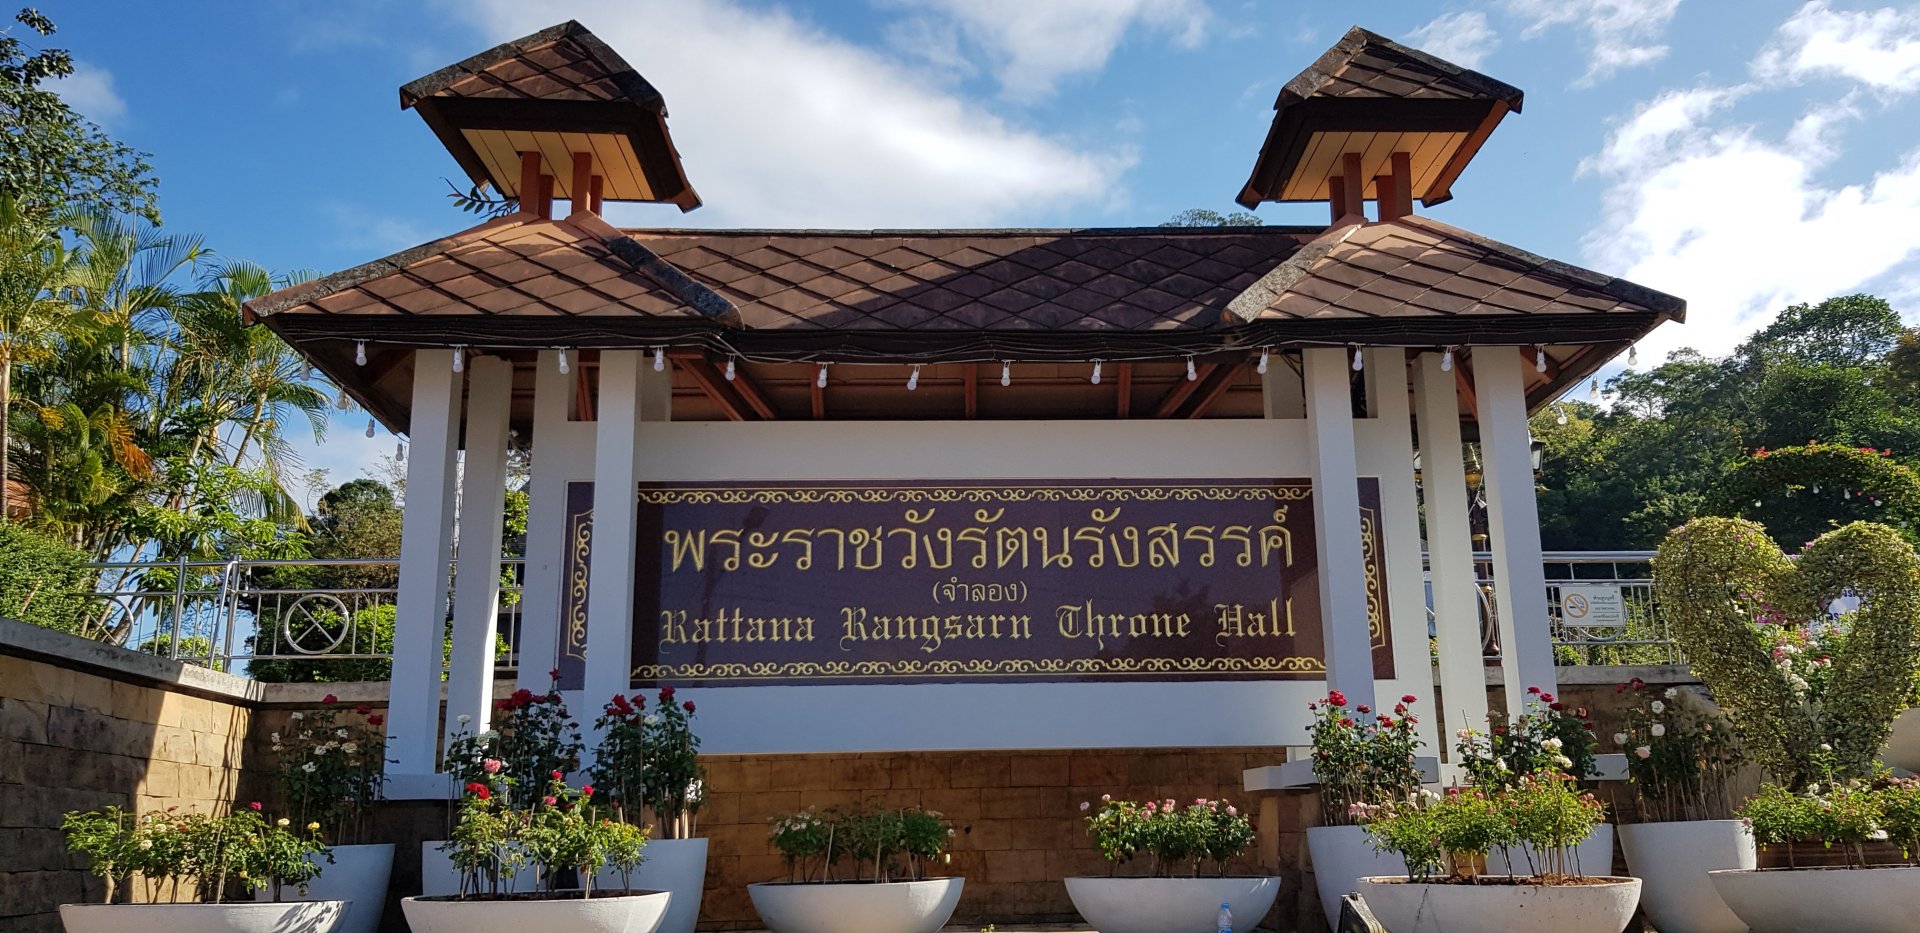 Rattana Rangsan Throne Hall (พระราชวังรัตนรังสรรค์)